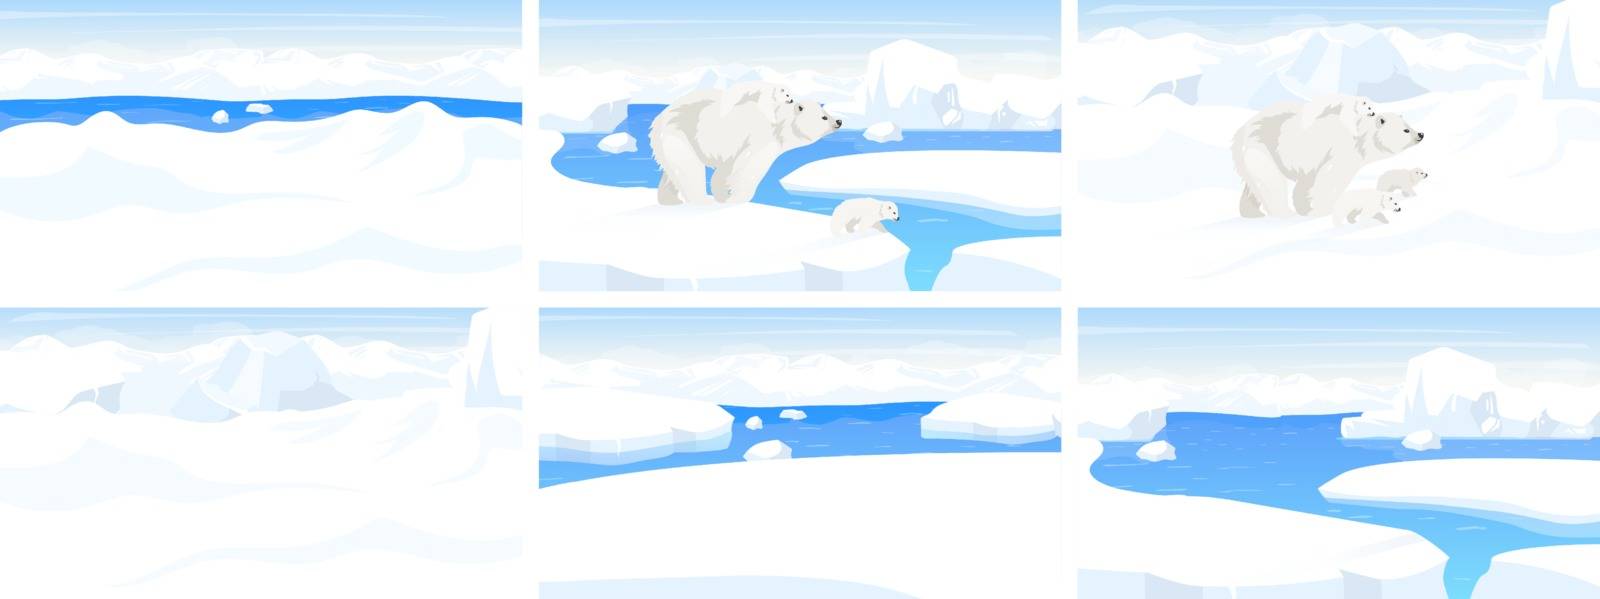 North pole wildlife flat vector illustration. Arctic landscape. Snow panoramic scene. White adult bear walking with cubs on winter hills. Iceberg edges. Marine mammal cartoon wallpaper by ntl